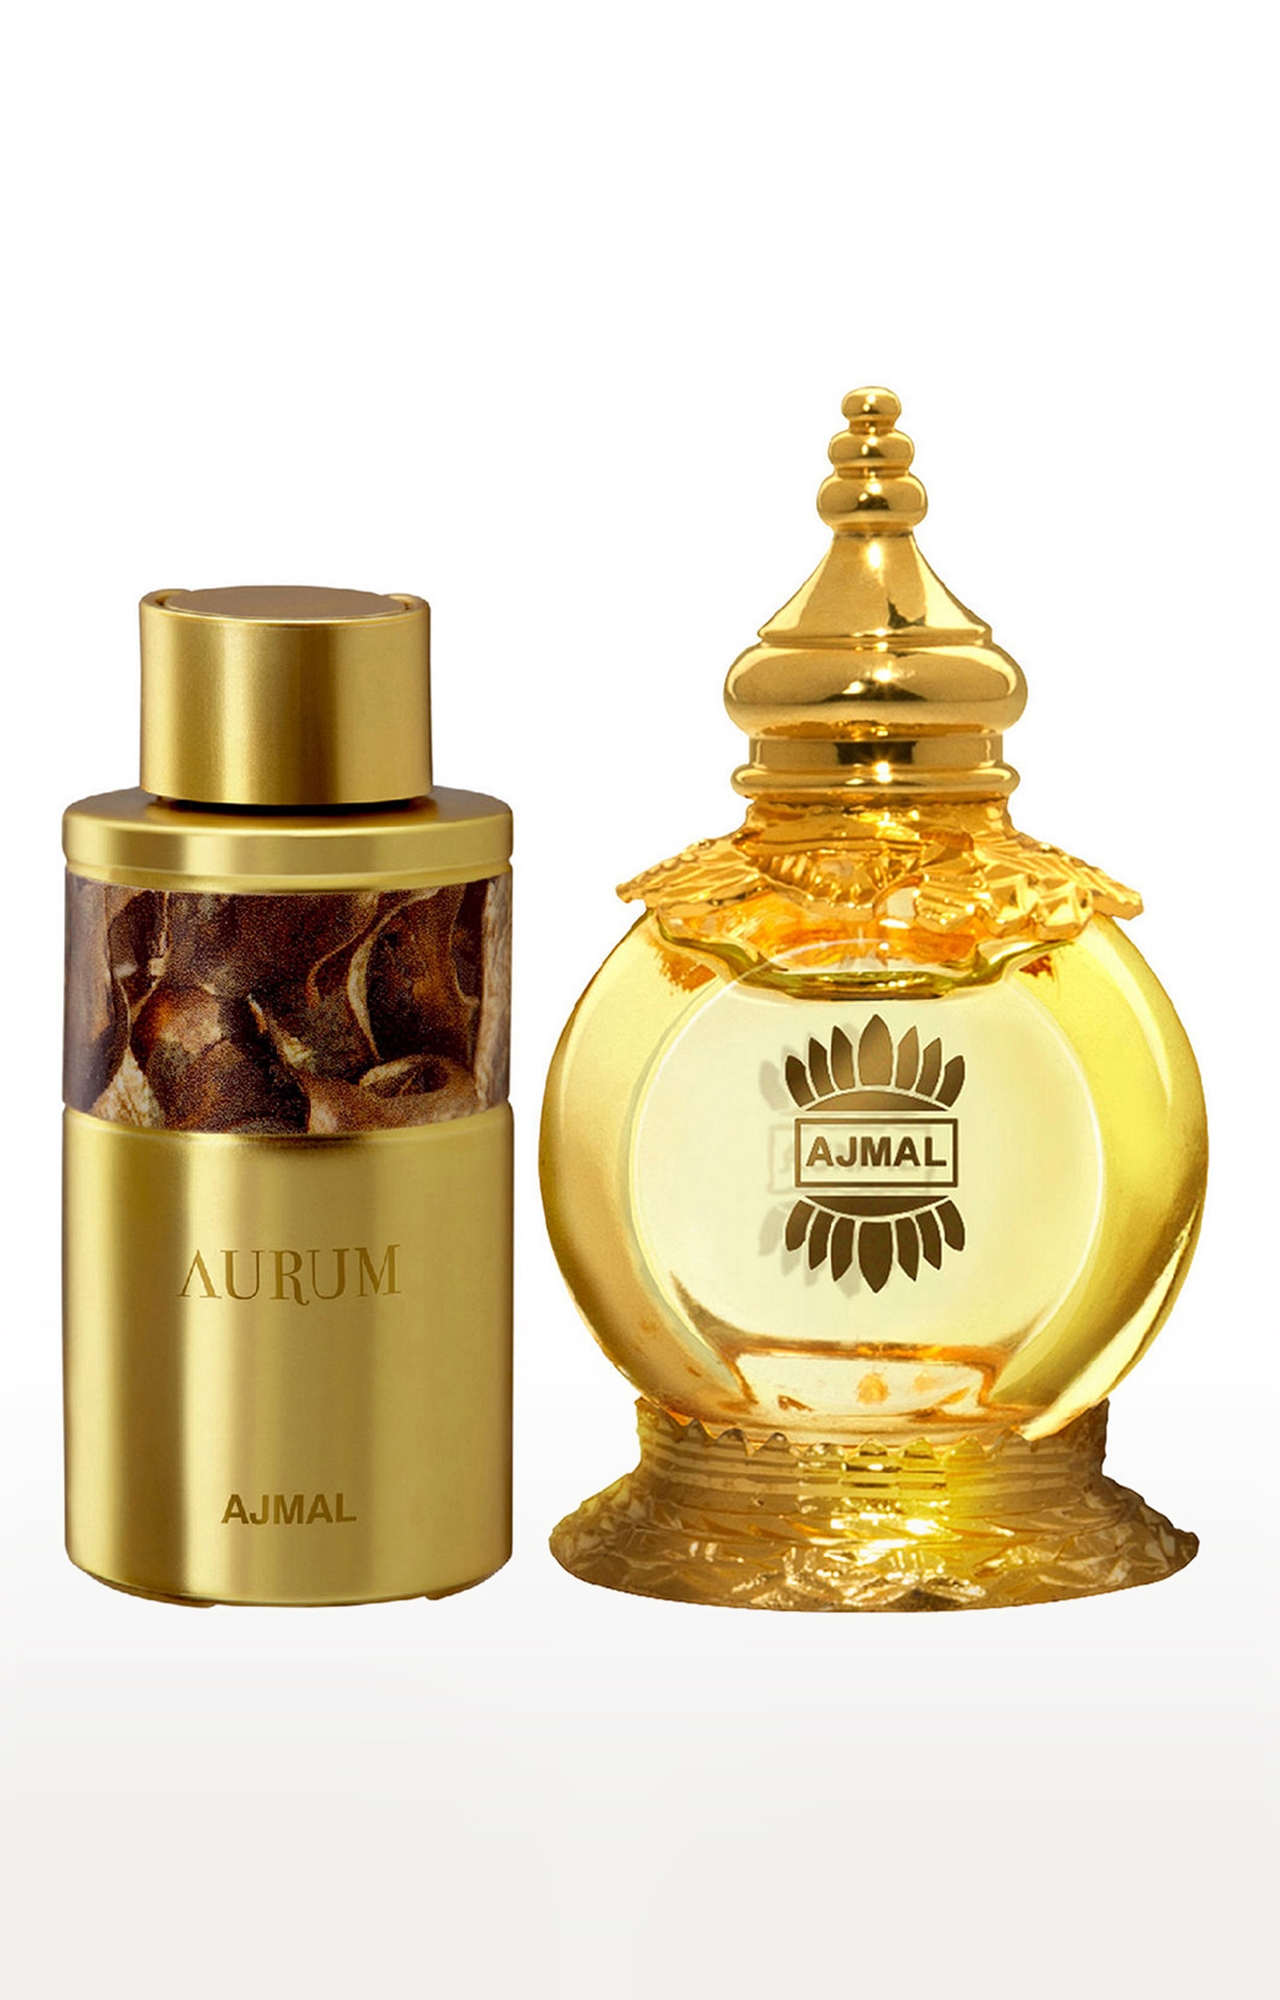 Ajmal Aurum Concentrated Perfume Oil Alcohol-free Attar 10ml for Women and Mukhallat AL Wafa Concentrated Perfume Oil Oriental Musky Alcohol-free Attar 12ml for Unisex